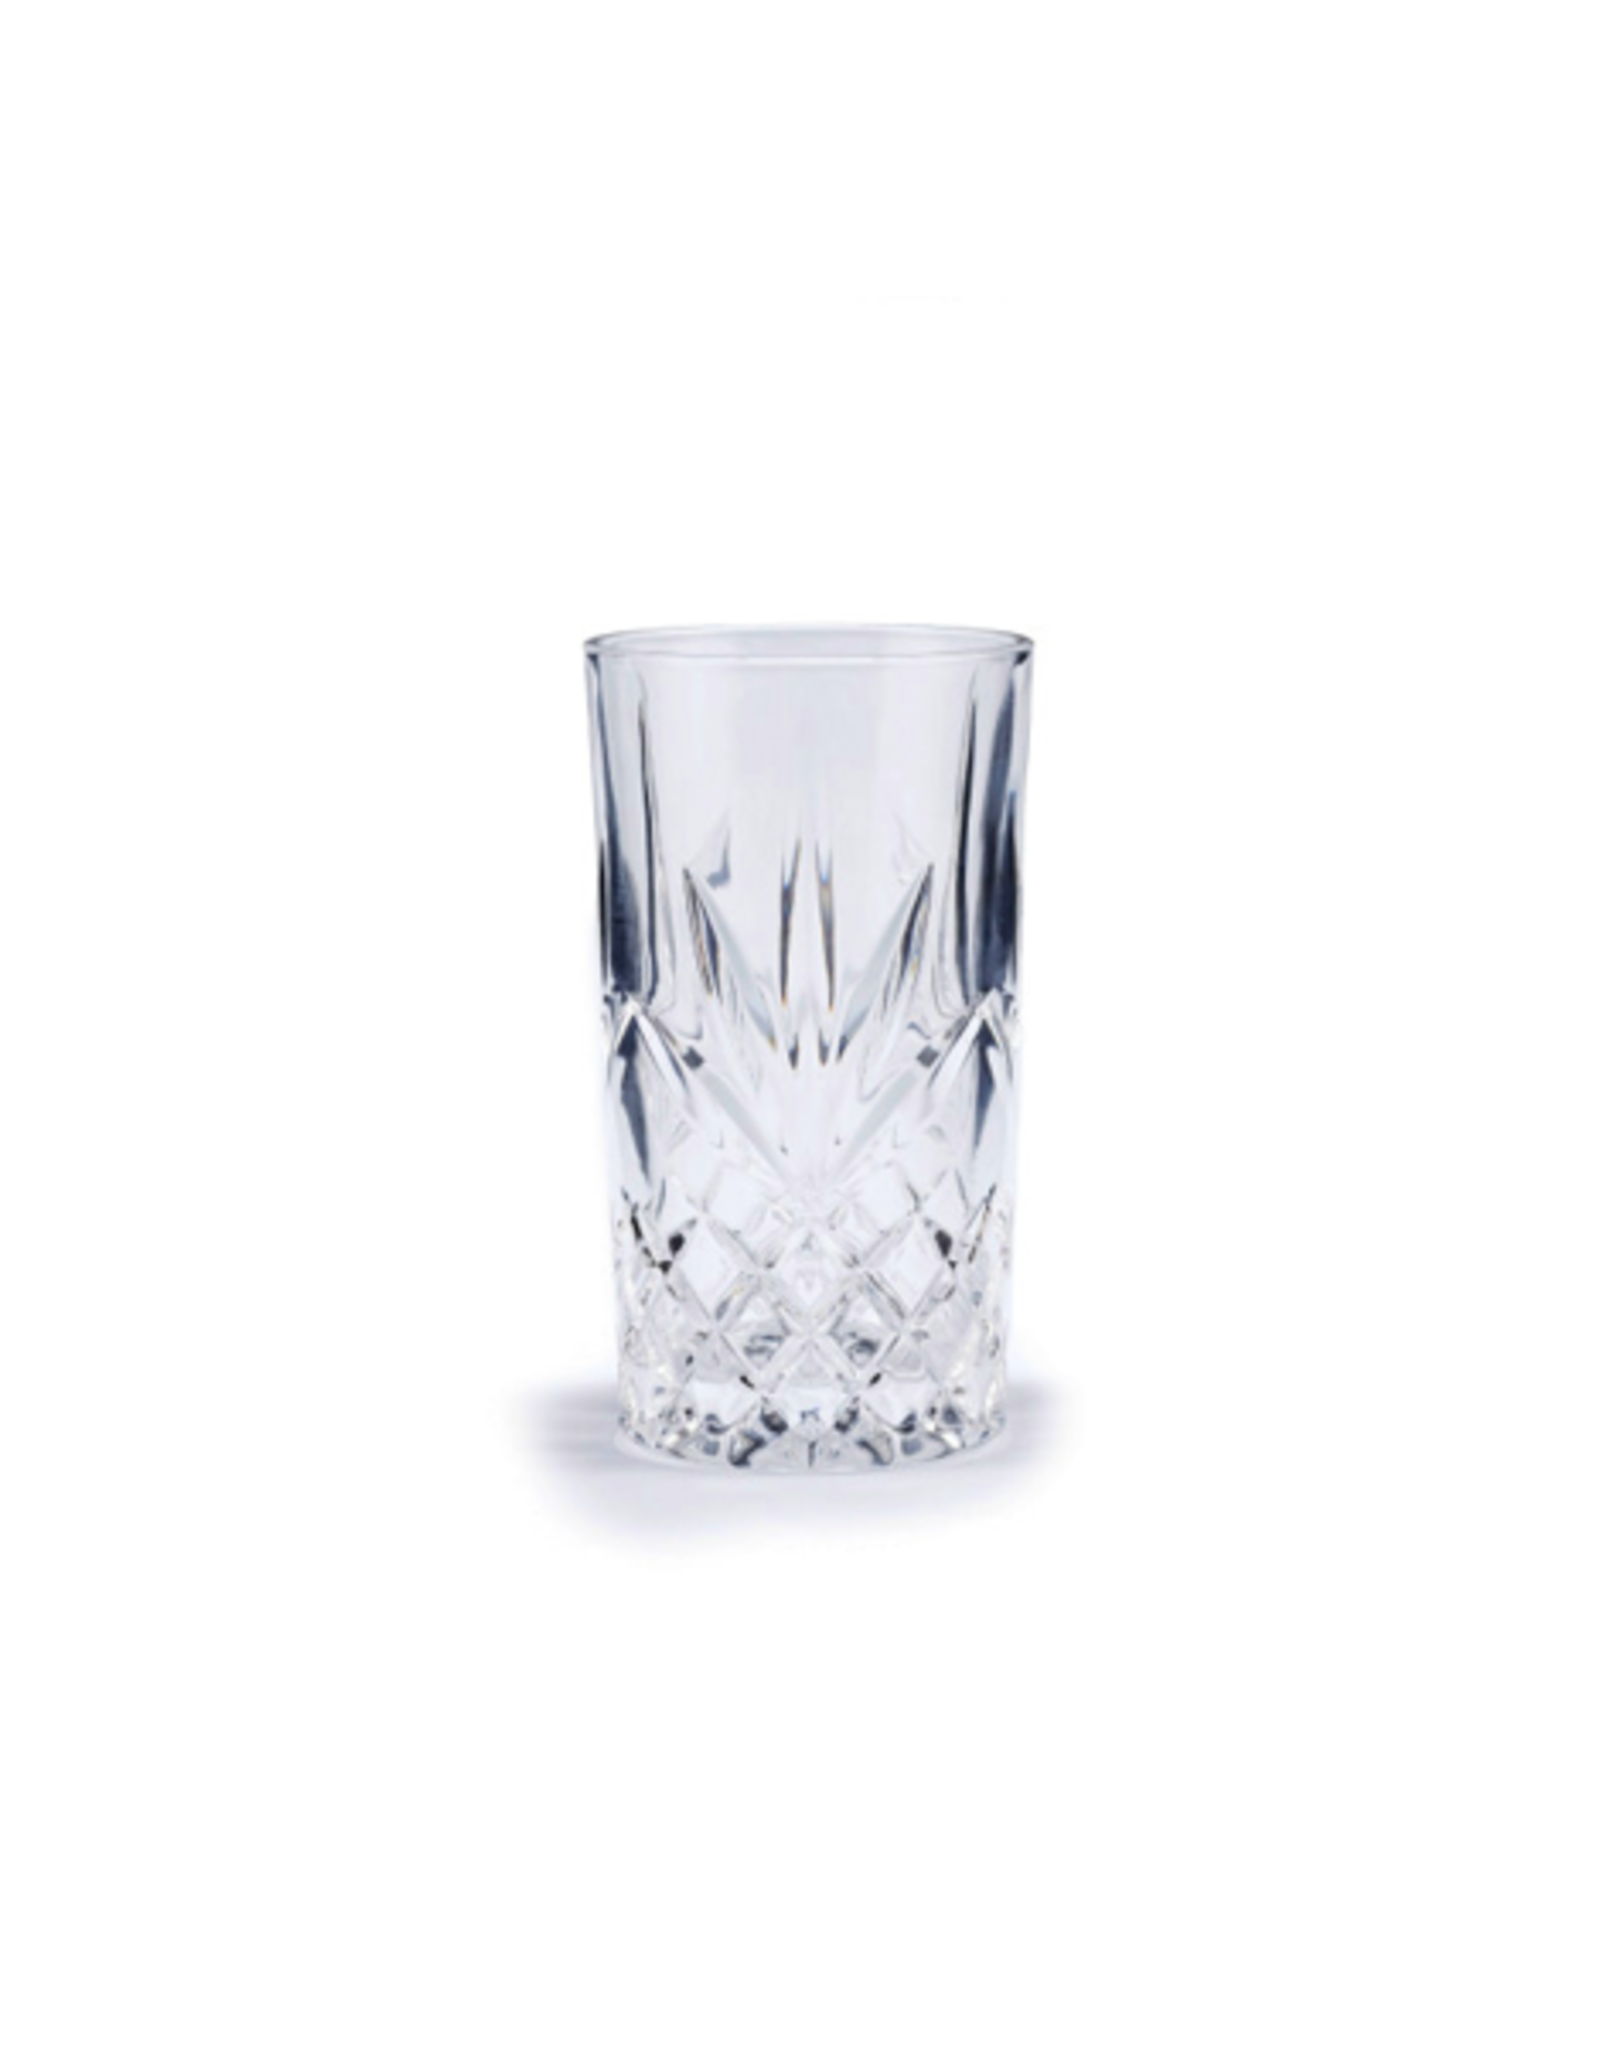 ICM - Highball Glass / Nell's, 320ml